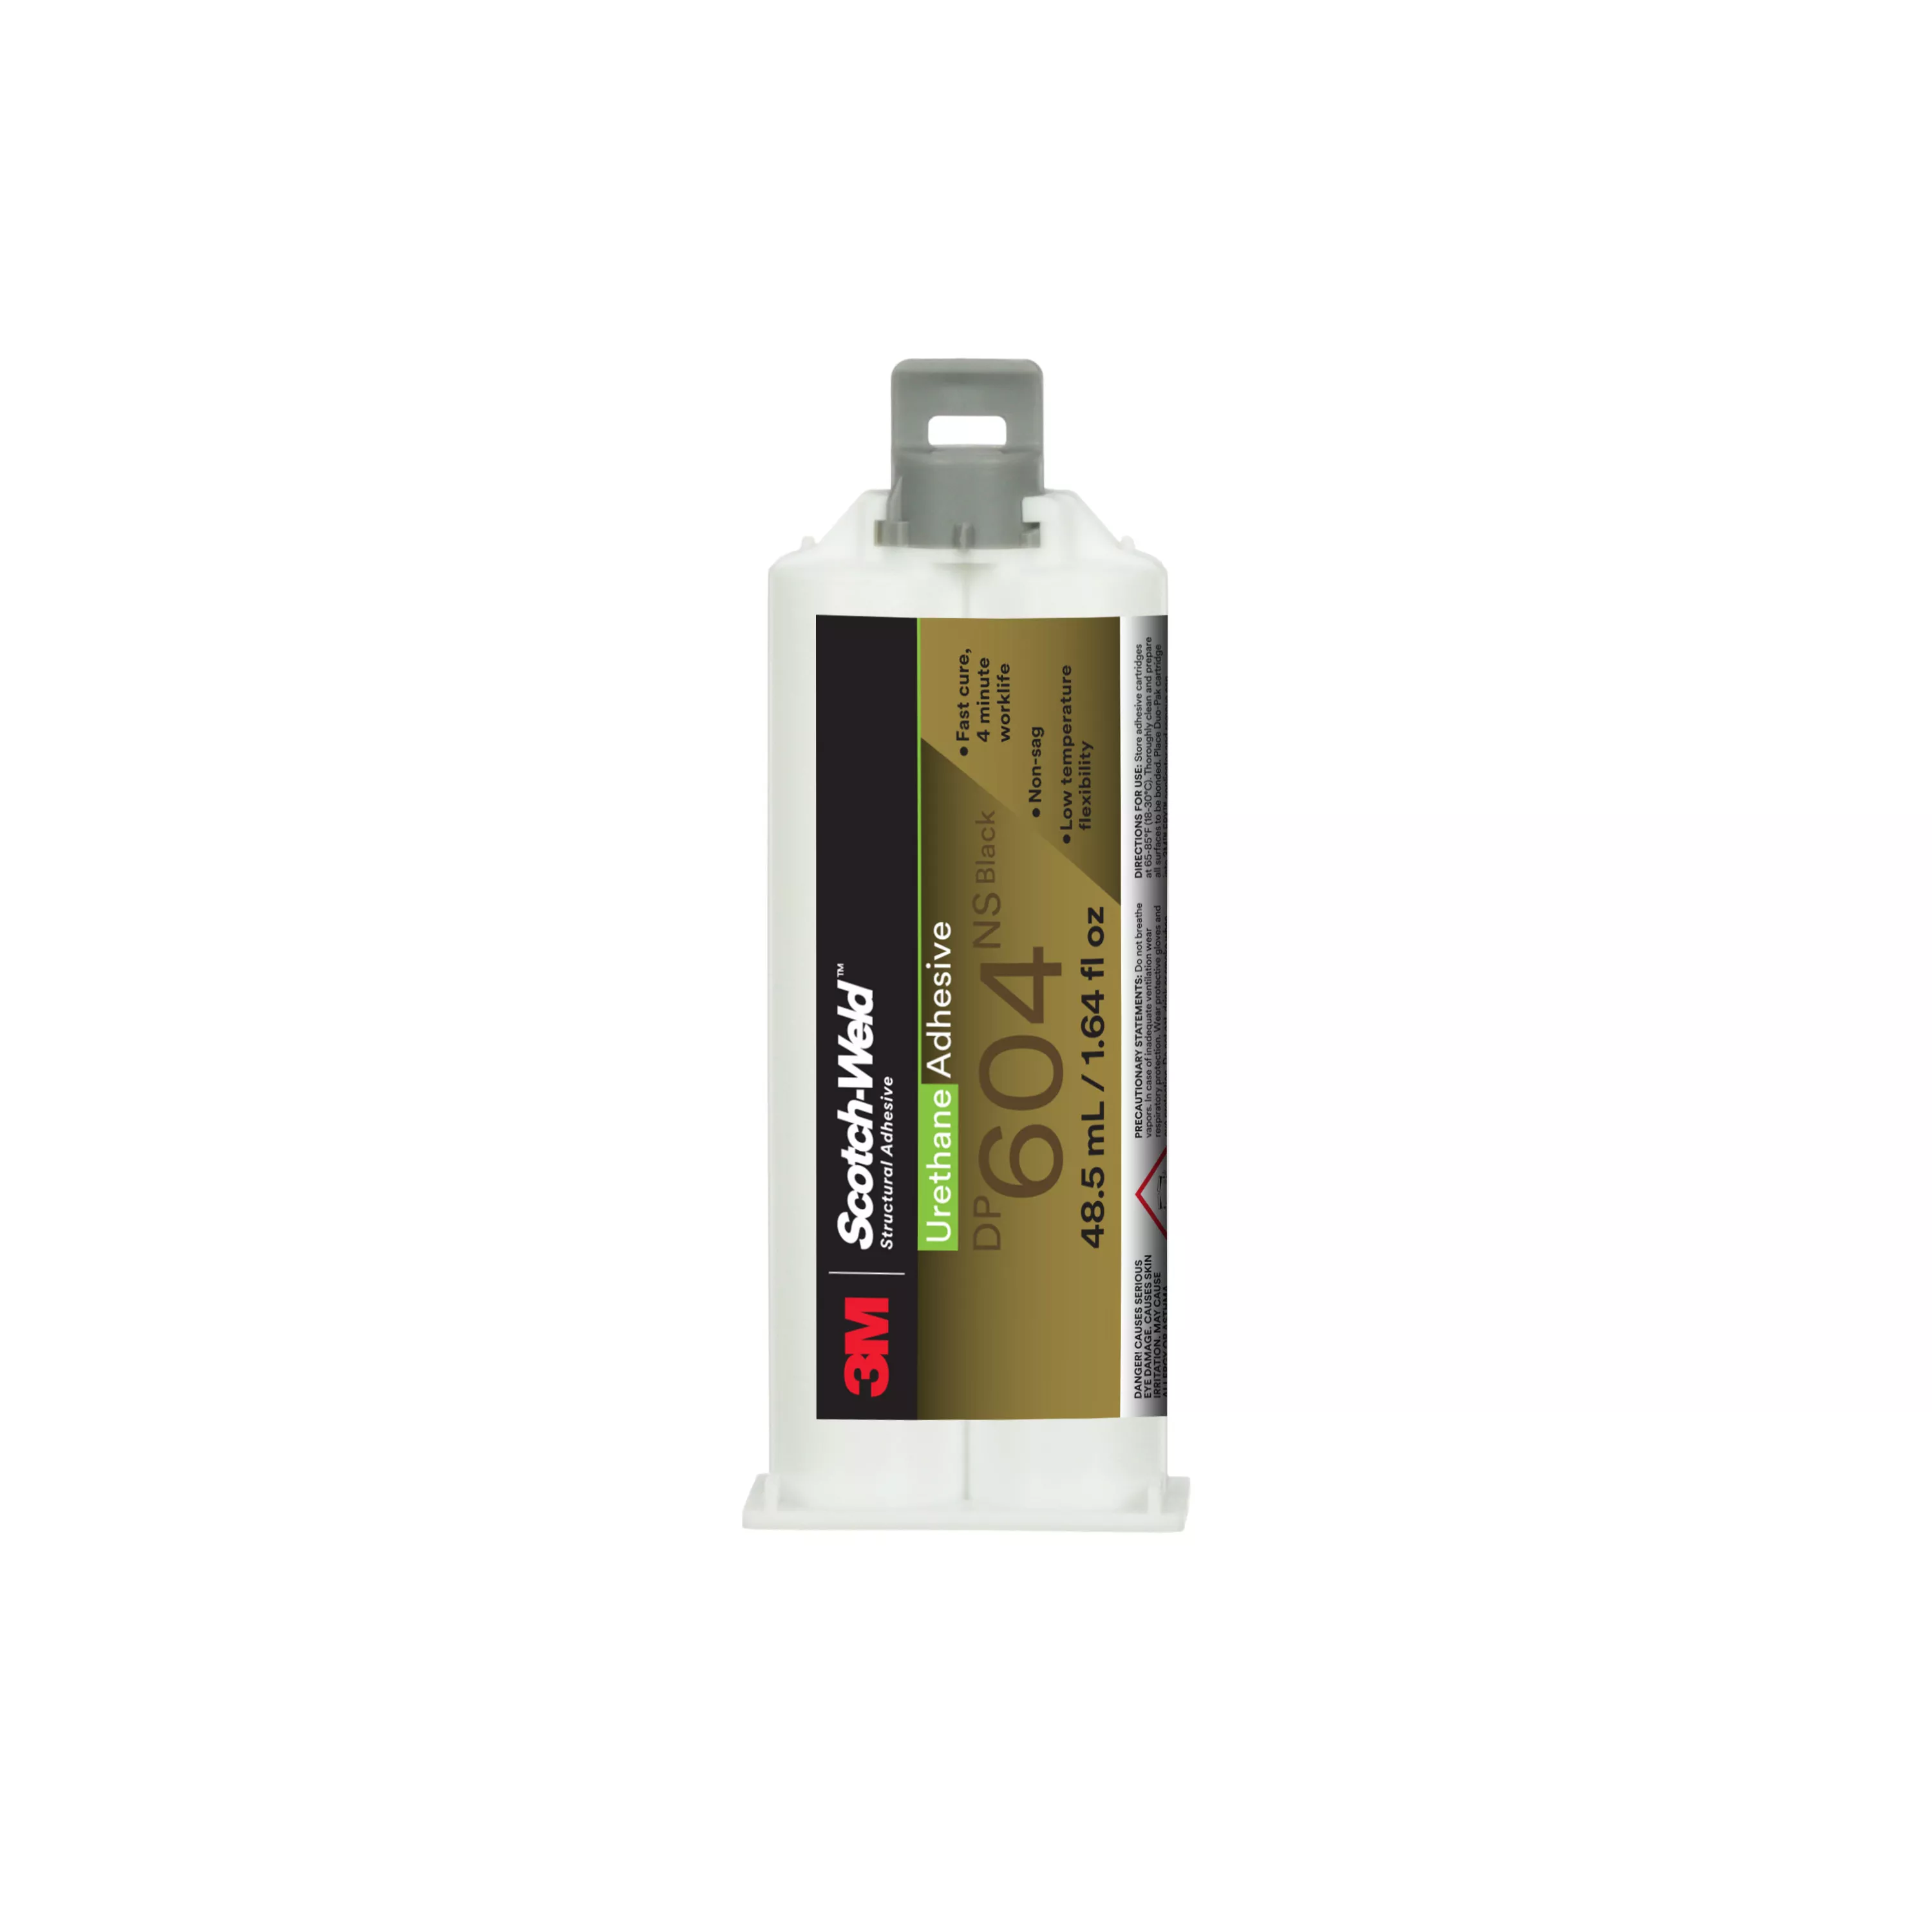 3M™ Scotch-Weld™ Urethane Adhesive DP604NS, Black, 48.5 mL Duo-Pak,
12/Case